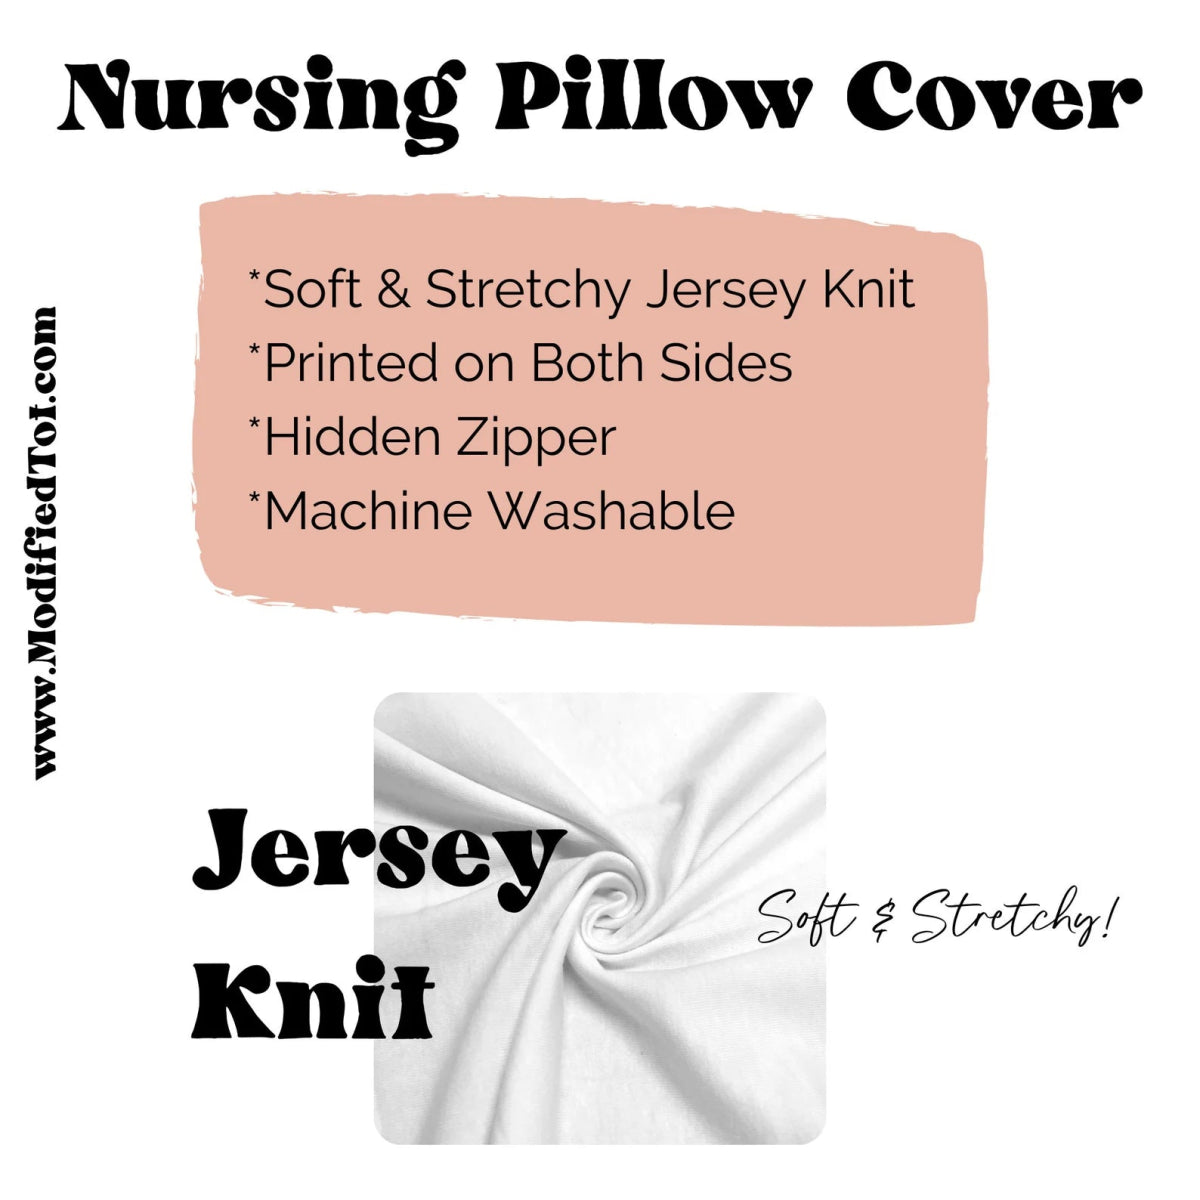 Tropical Floral Nursing Pillow Cover - gender_girl, Theme_Floral, Theme_Tropical